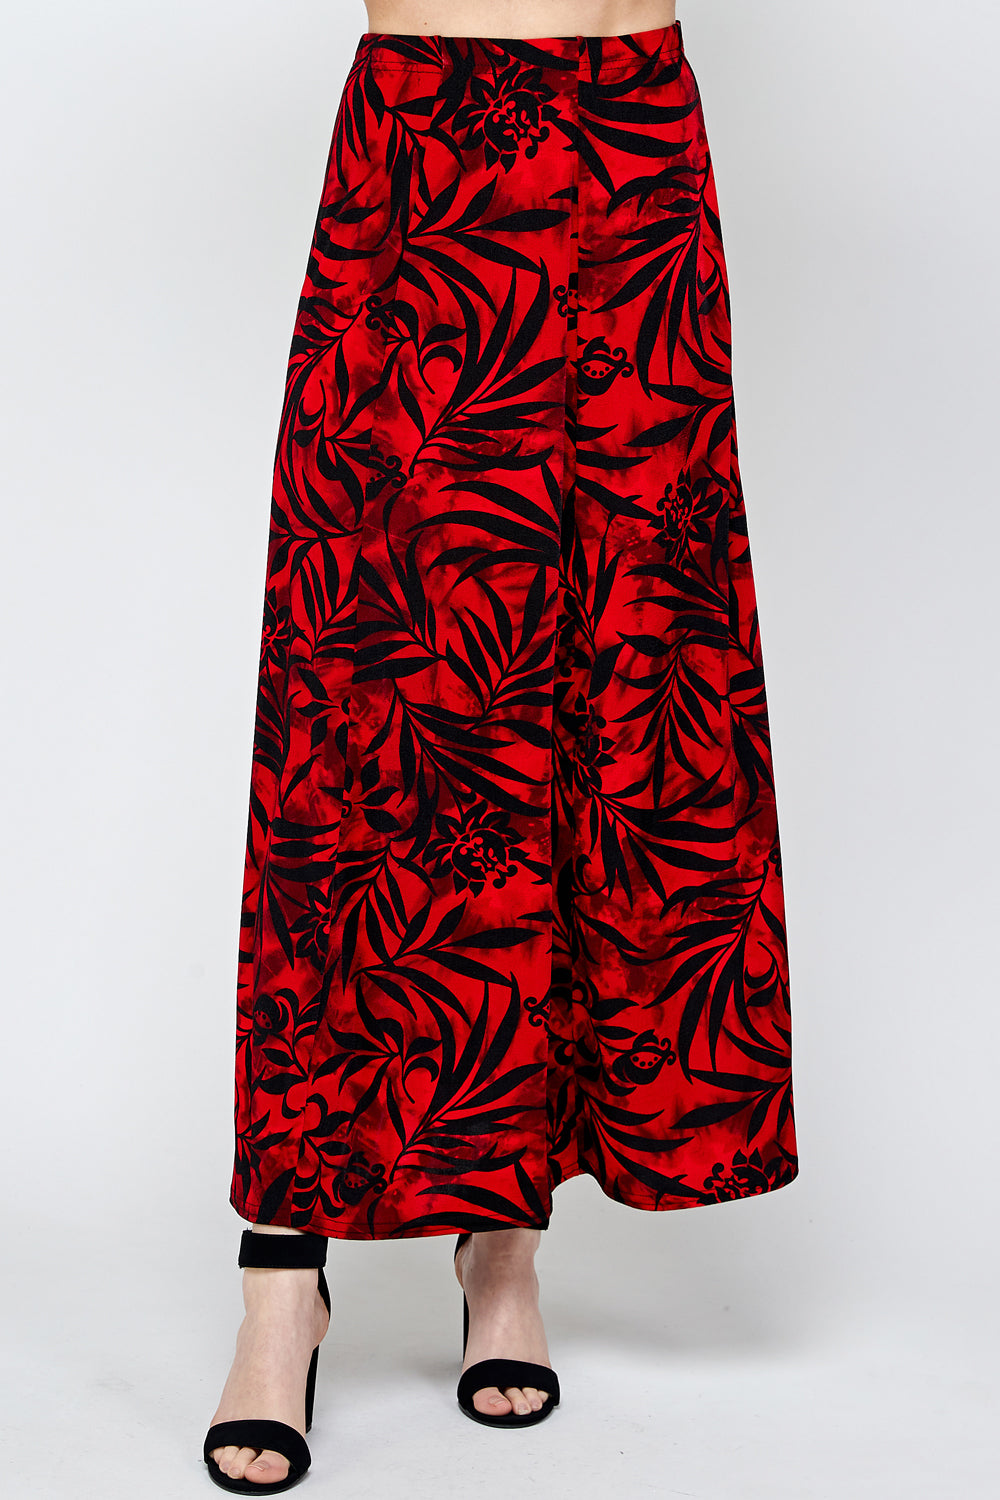 Women's Stretchy Flare Skirt-602BN-ARP2-W173